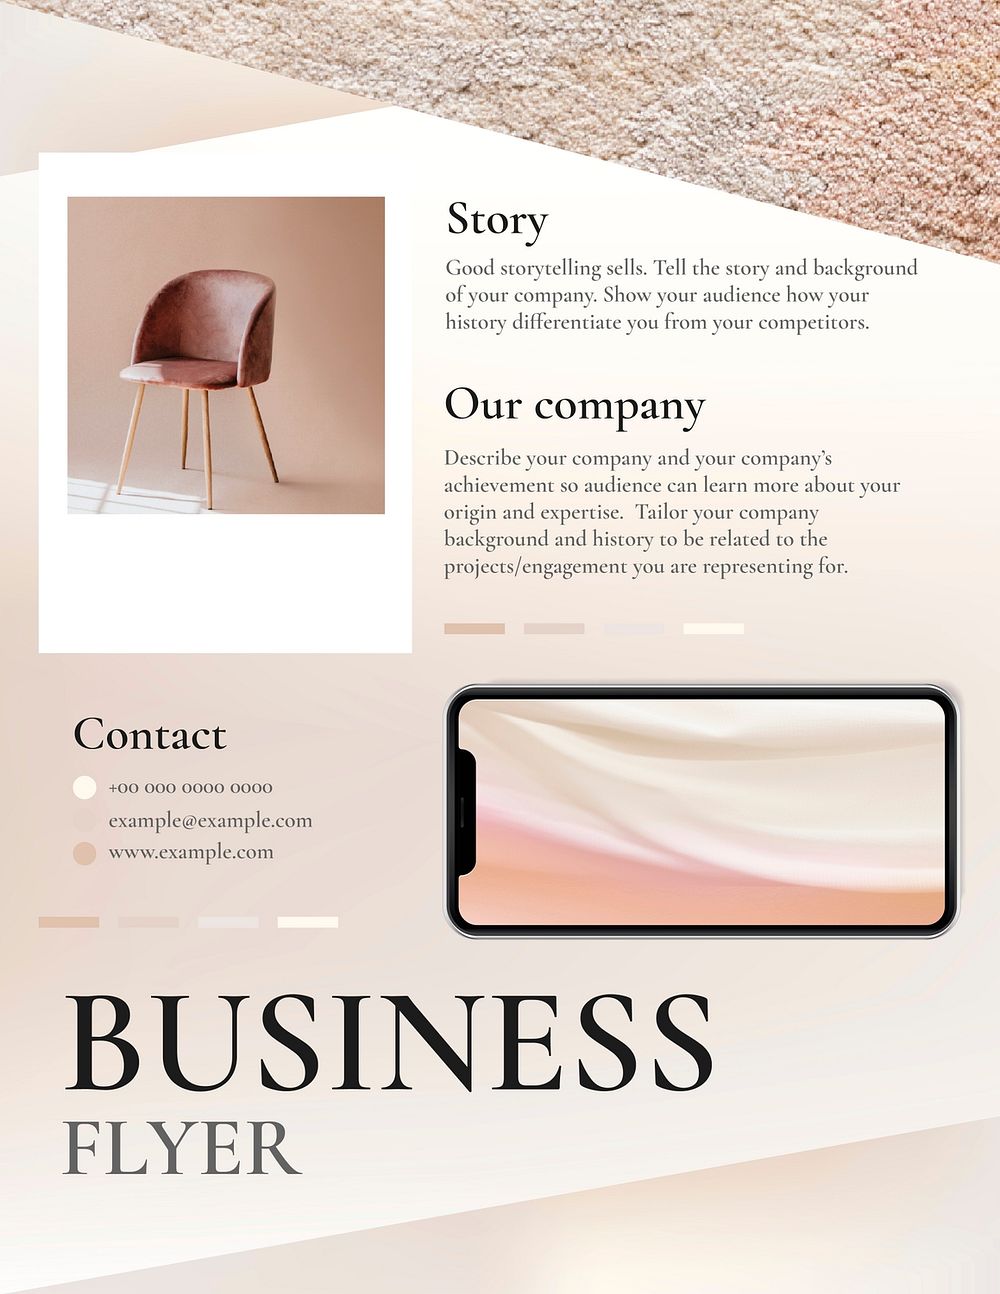 Editable business flyer template psd in feminine style design